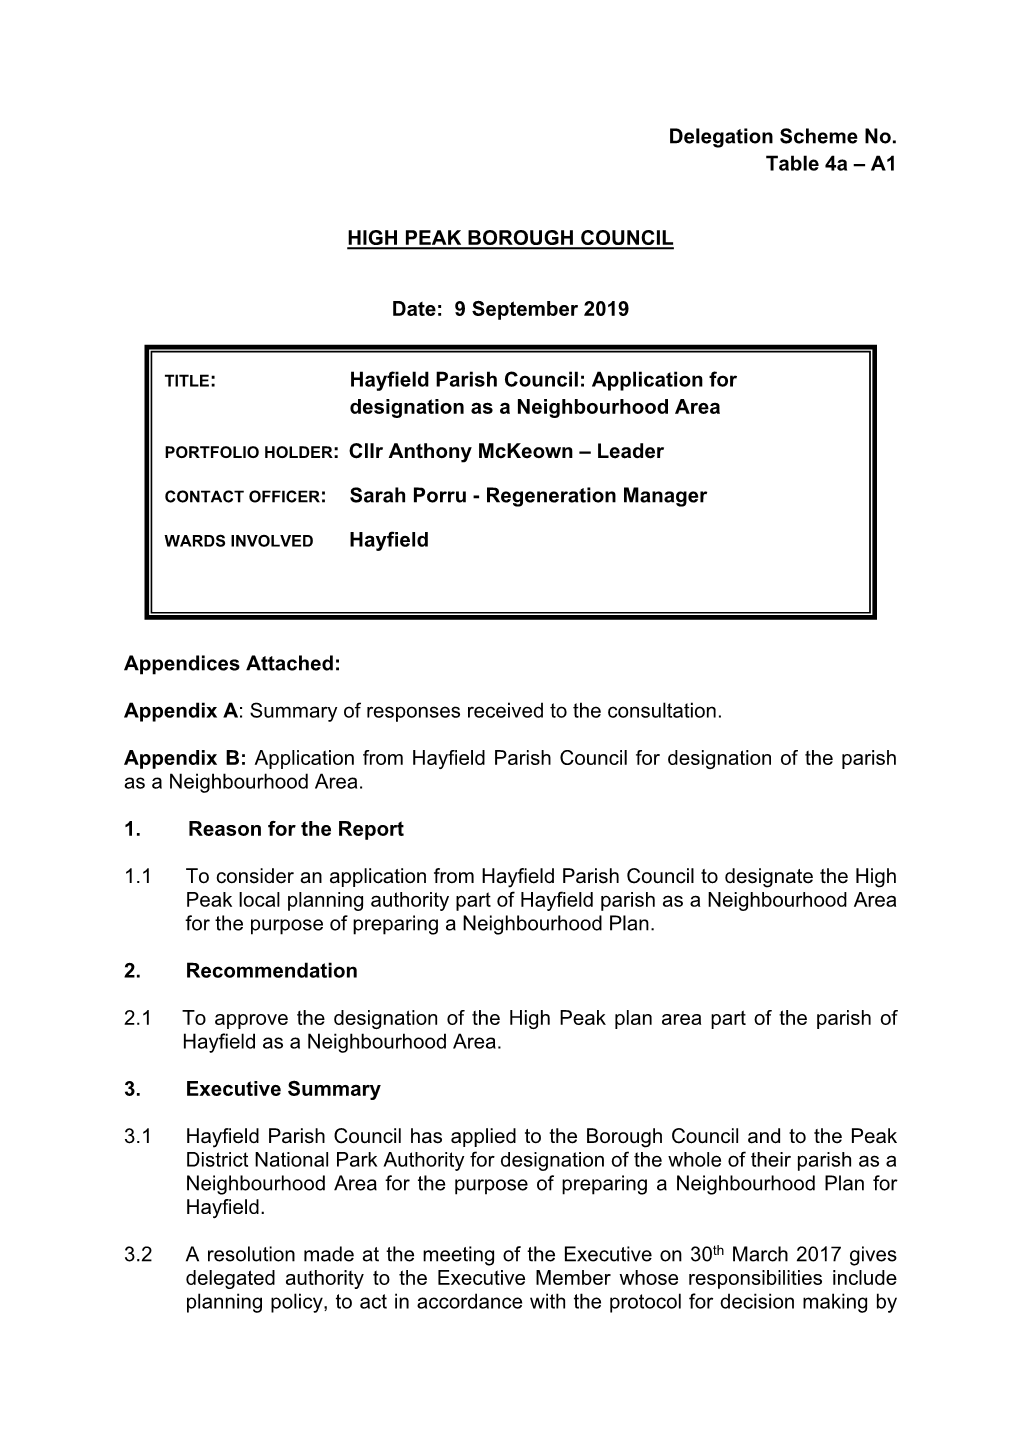 Hayfield Parish Council: Application for Designation As a Neighbourhood Area